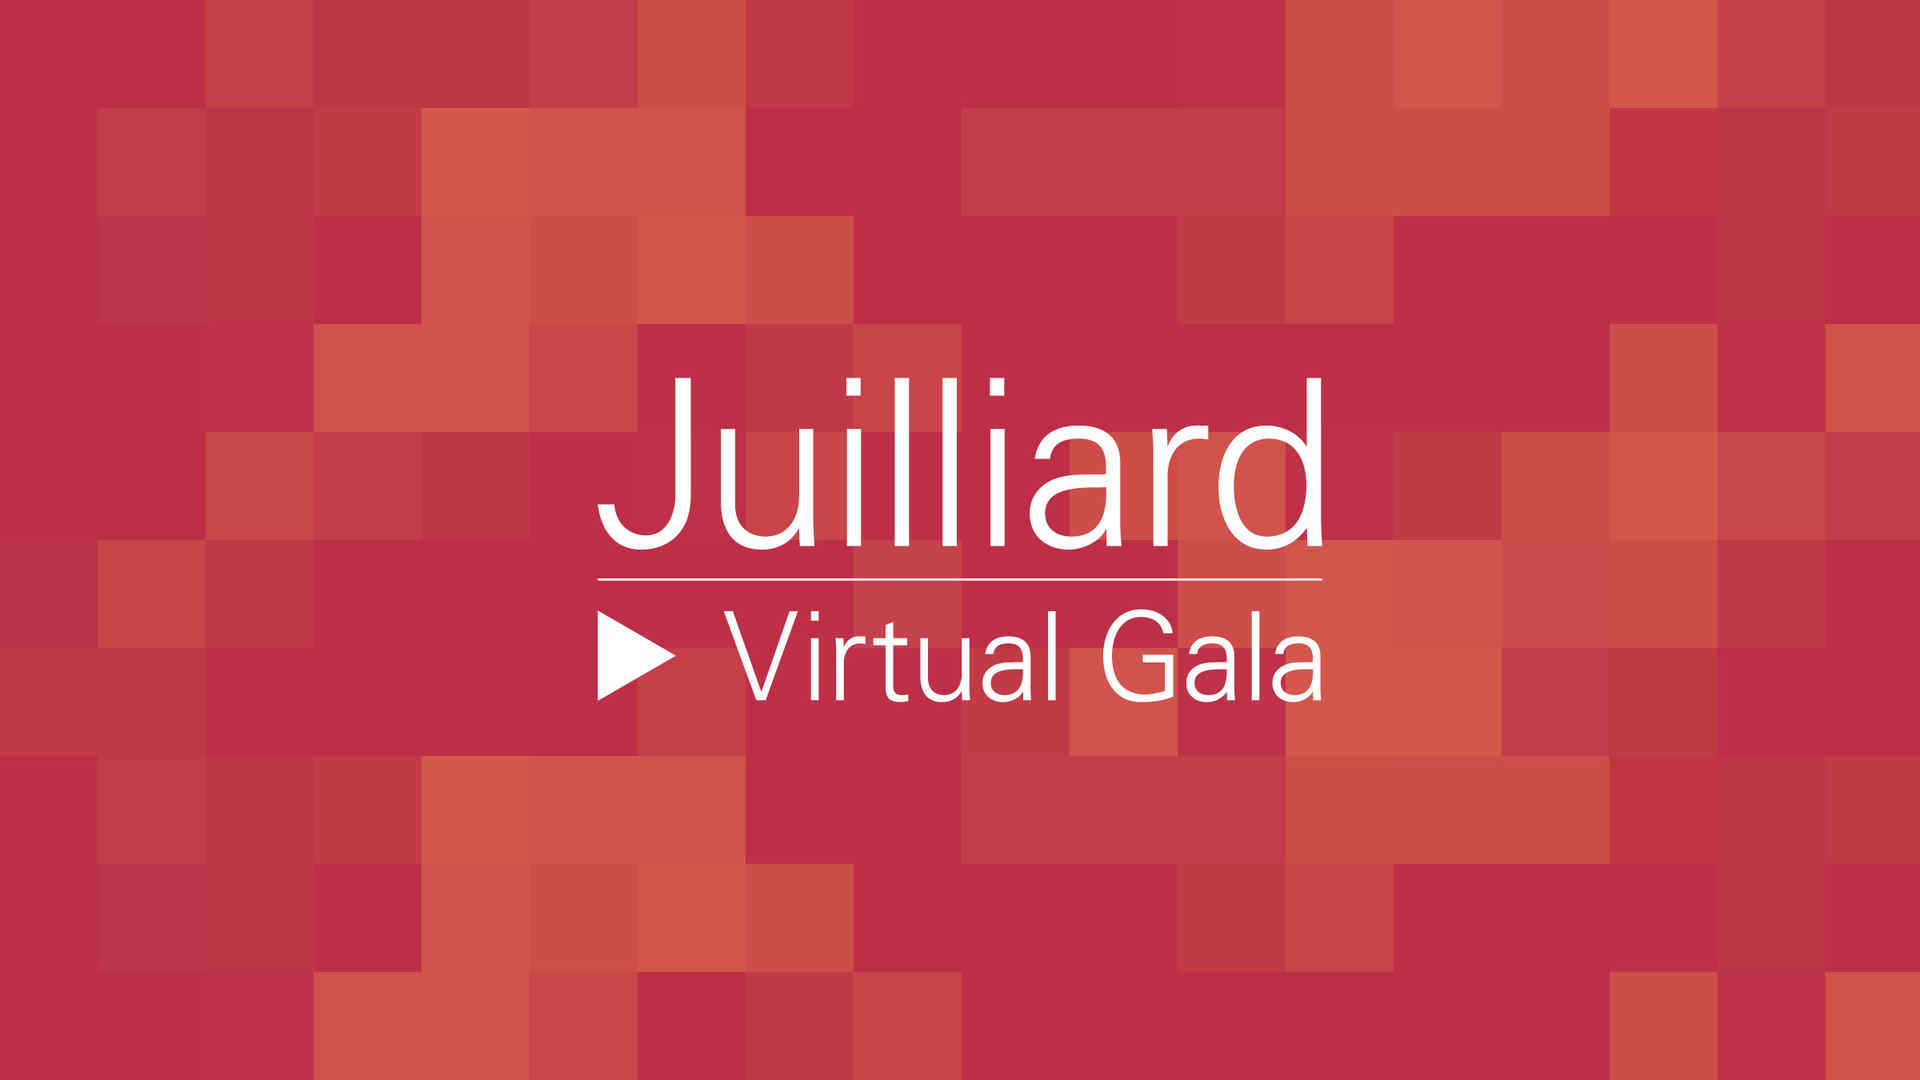 Virtual gala artwork